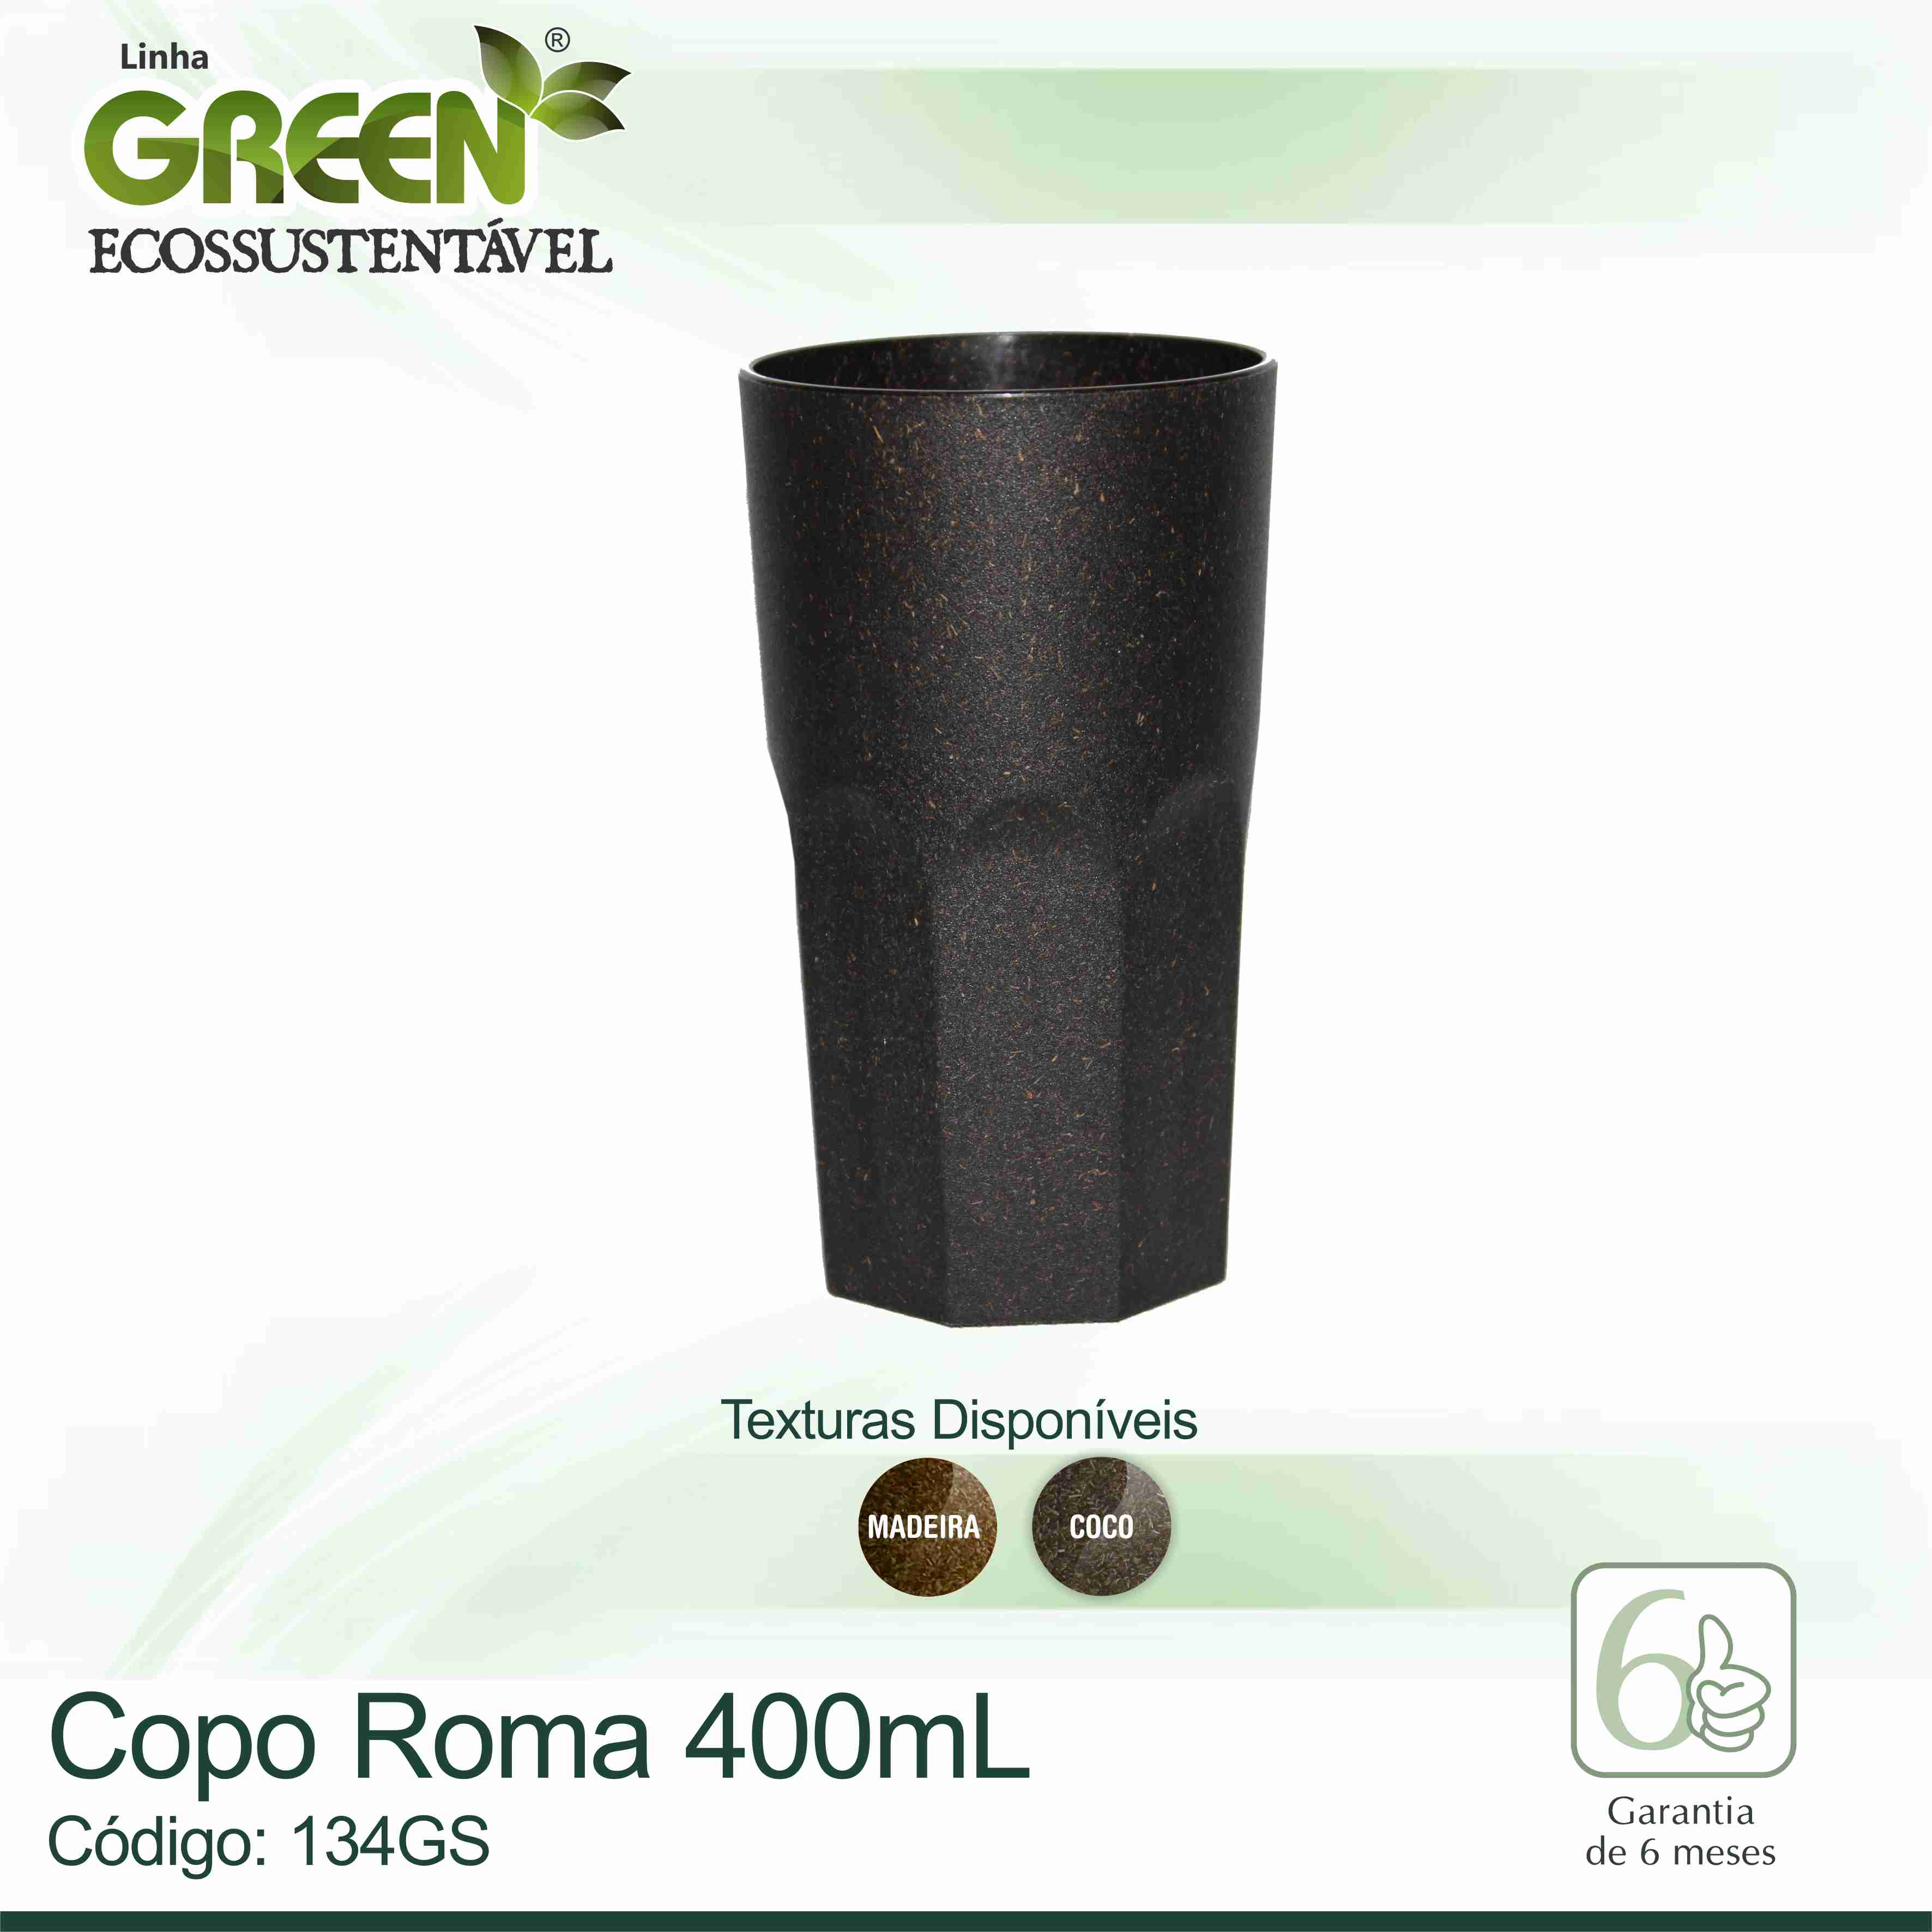 Copo Roma GREEN - 400ml